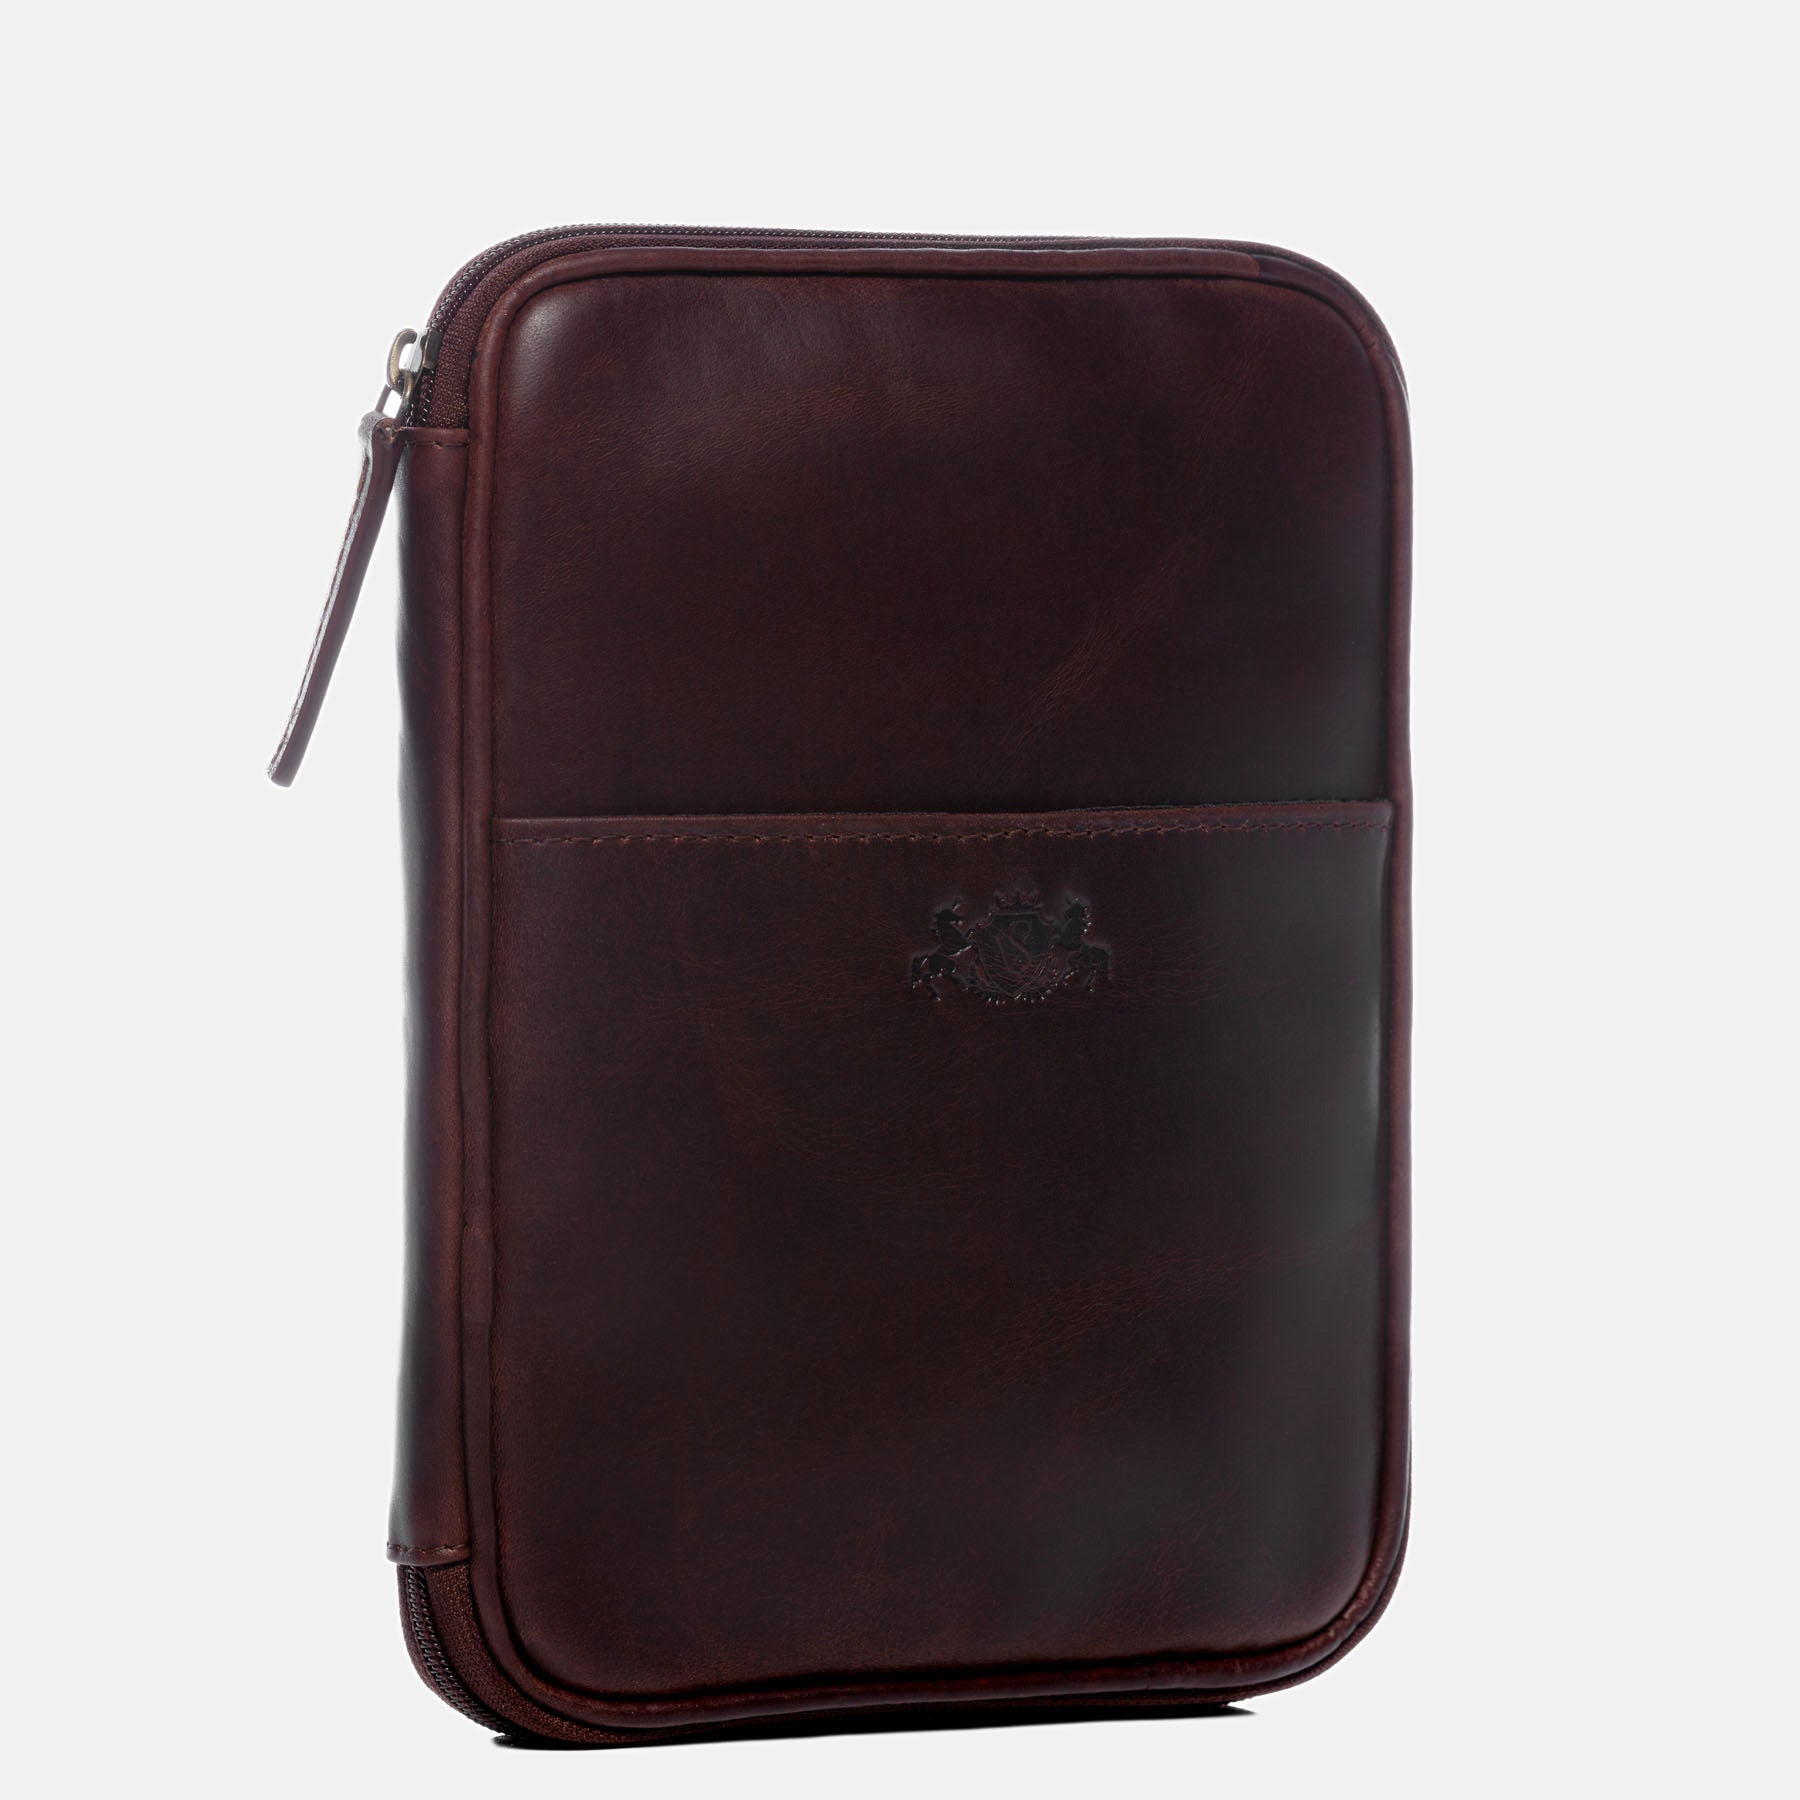 Organizer tablet travel JOONEY iPad natural leather brown-cognac